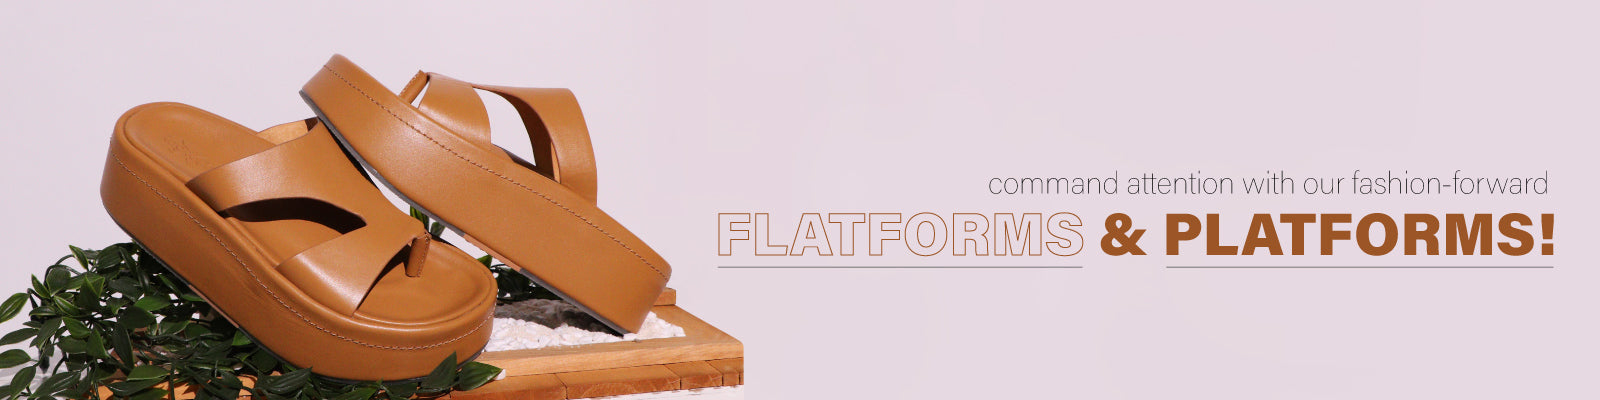 Flatforms & Platforms